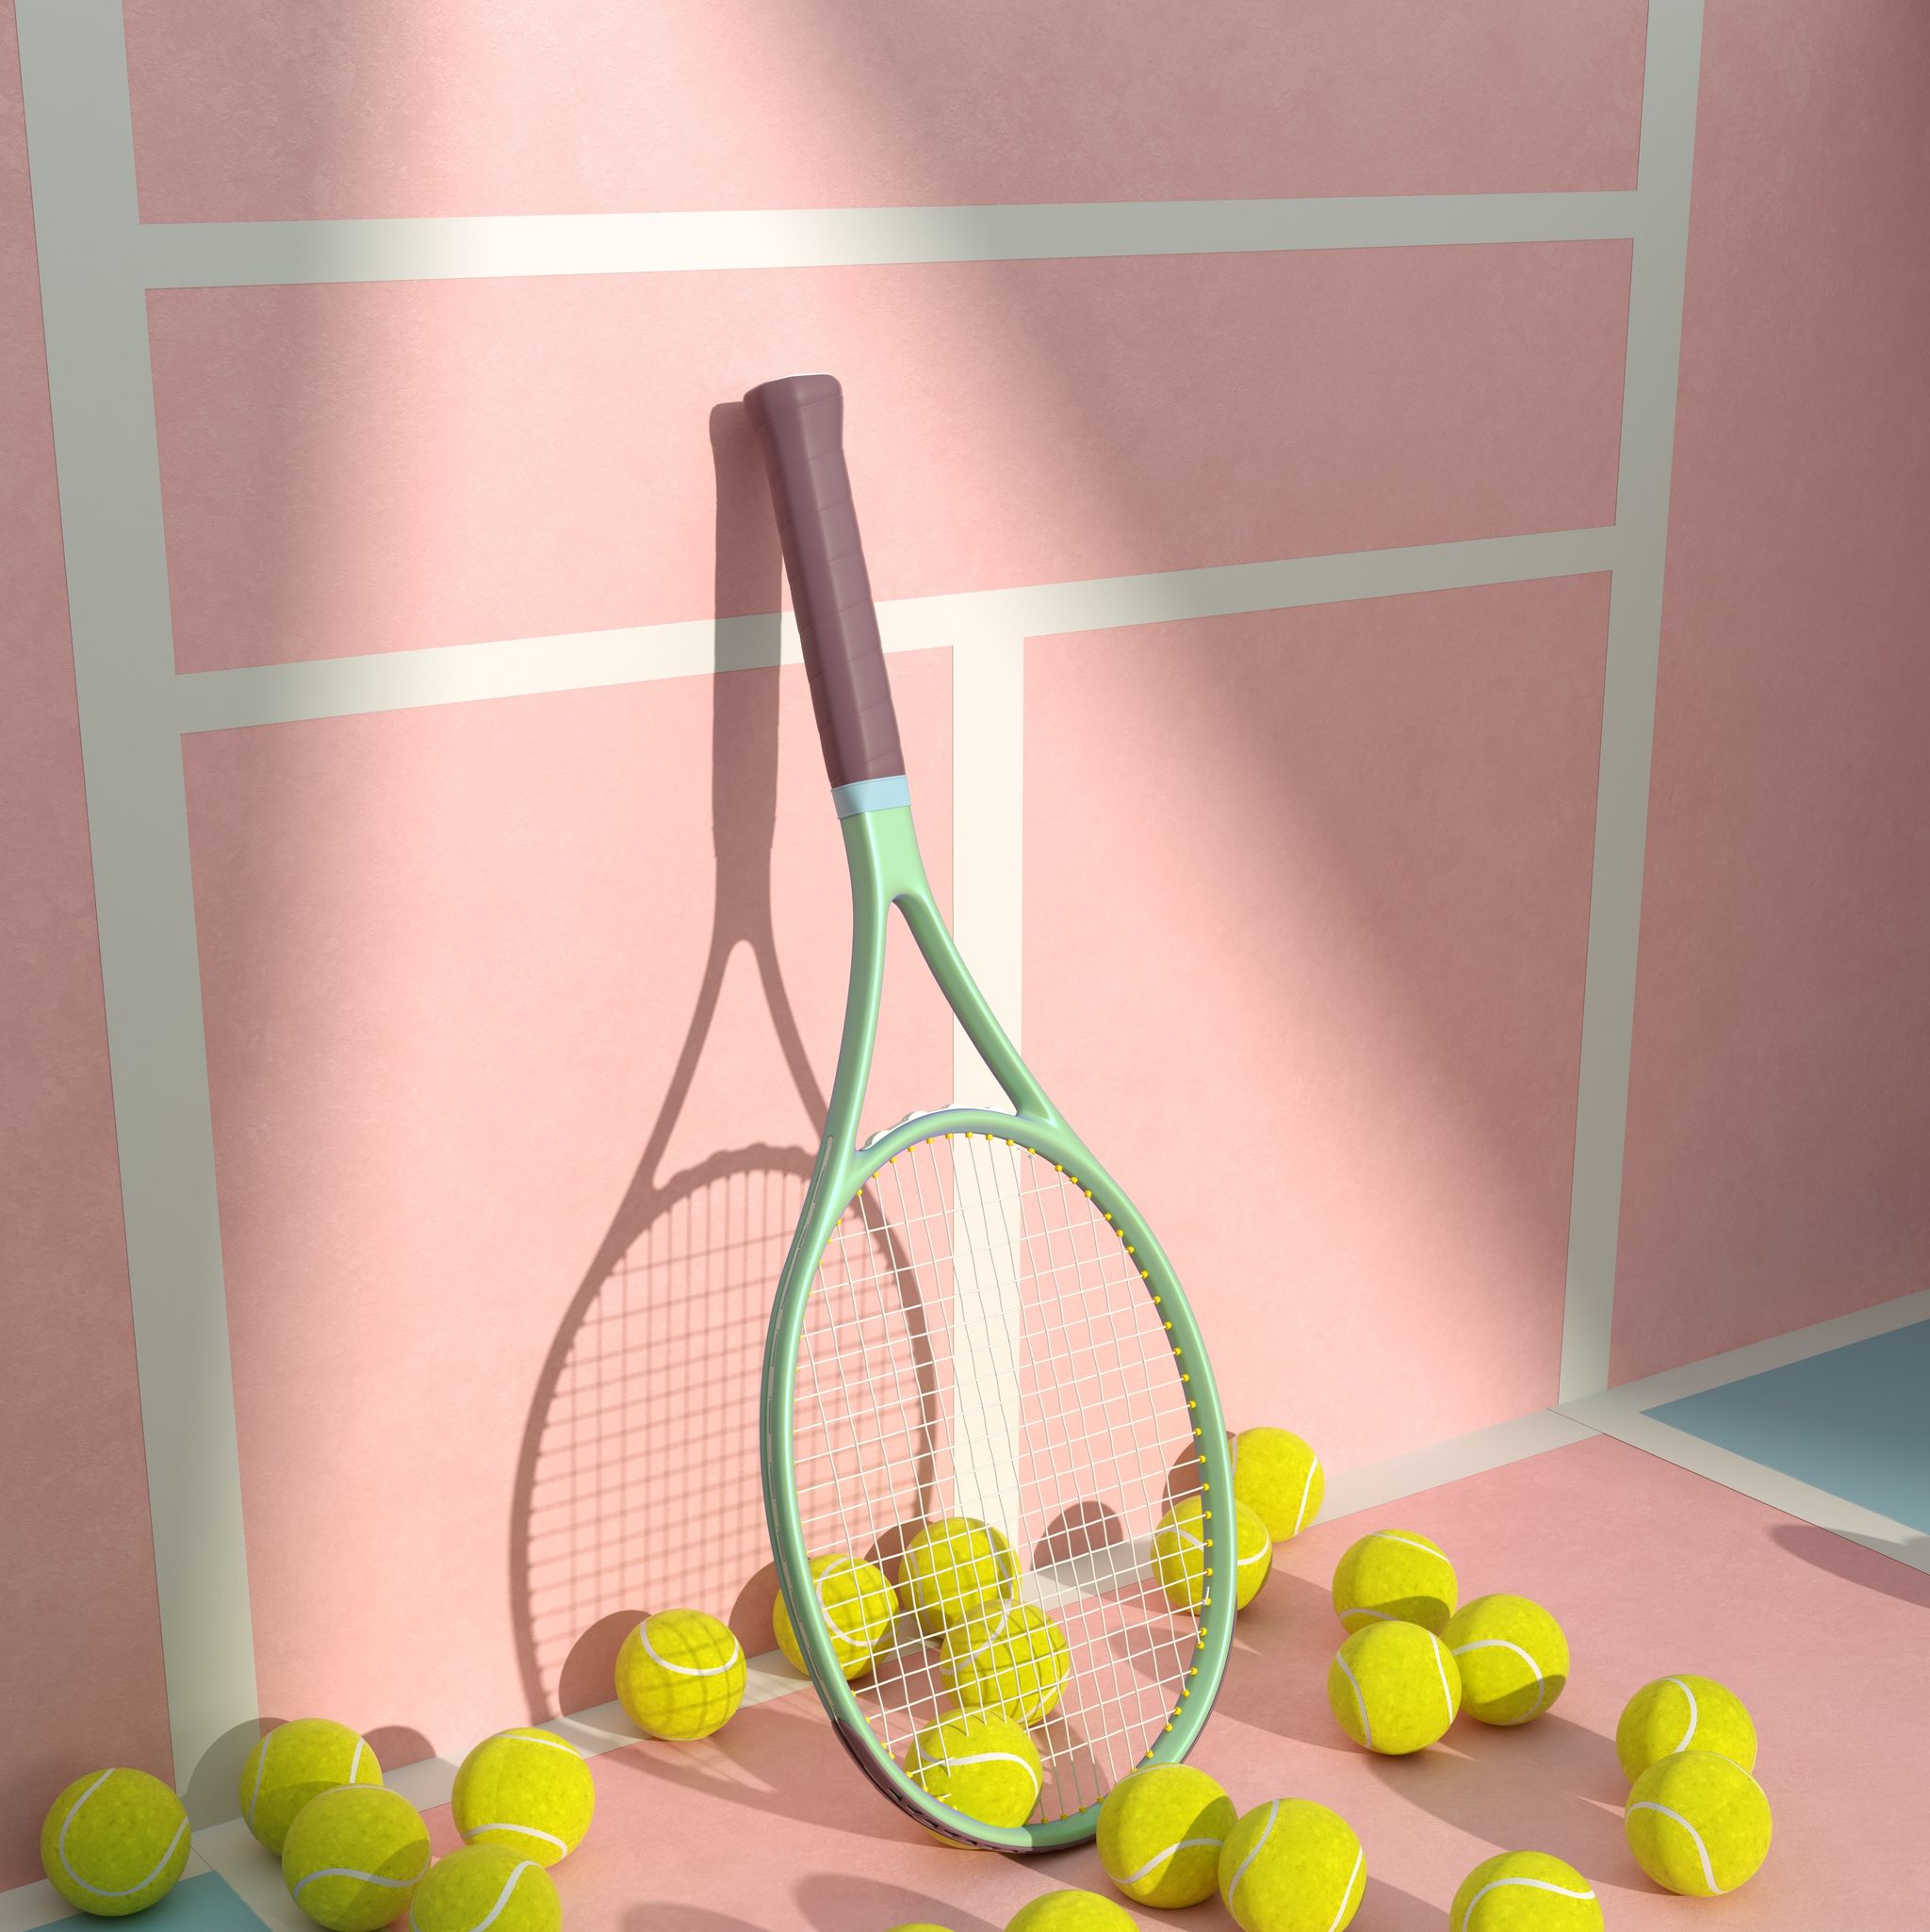 How Does a Tennis Tiebreak Work? - TennisReboot